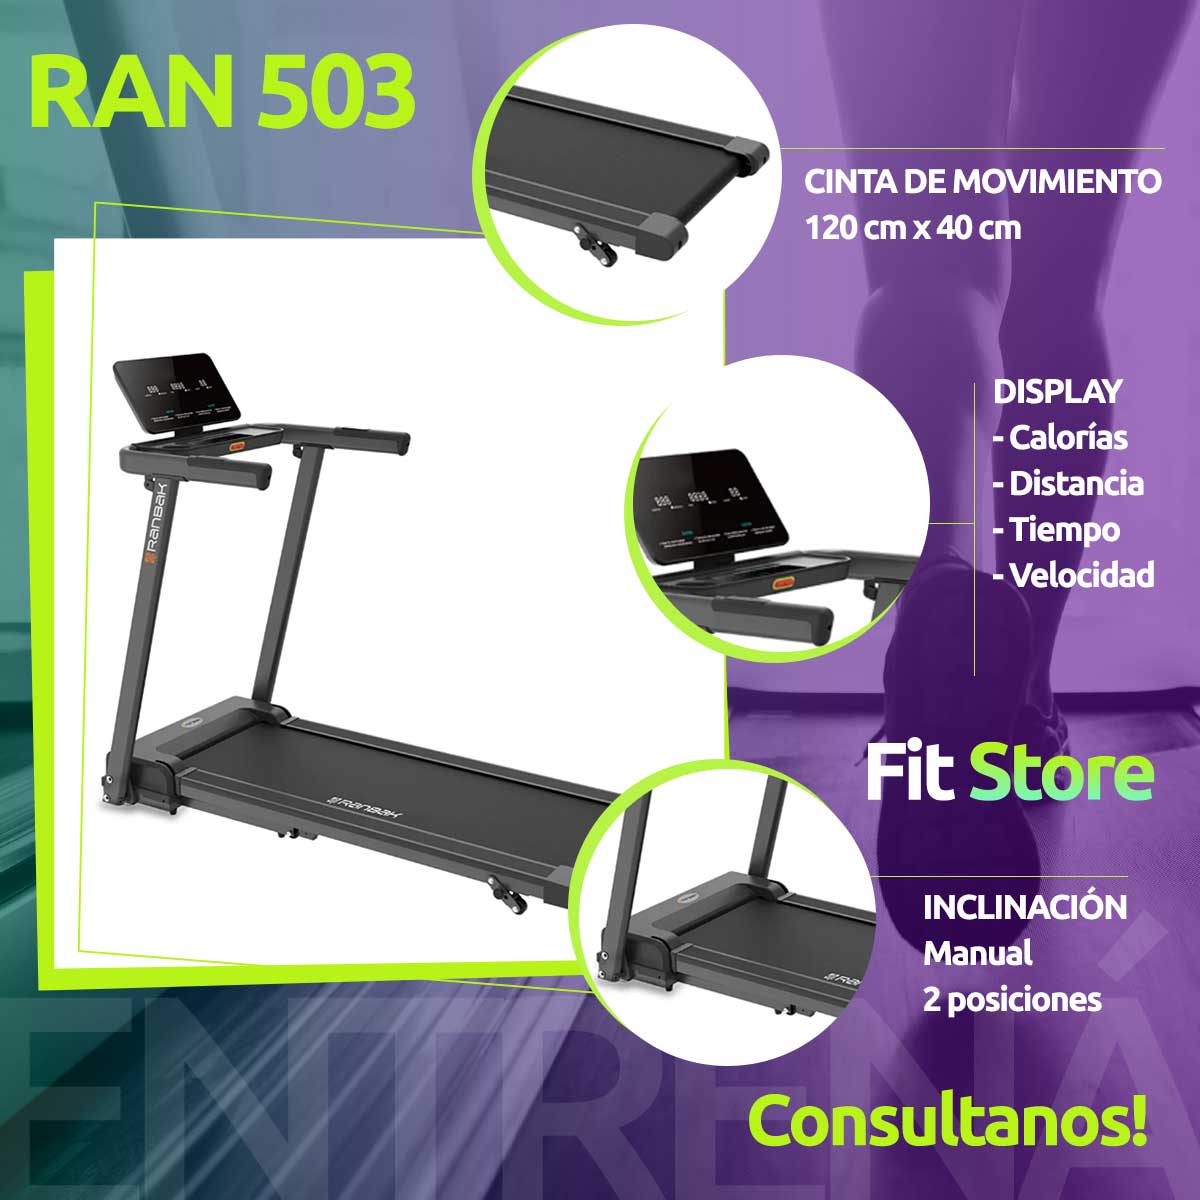 Cinta para correr Ran 507 - Muek - Equipamiento Fitness